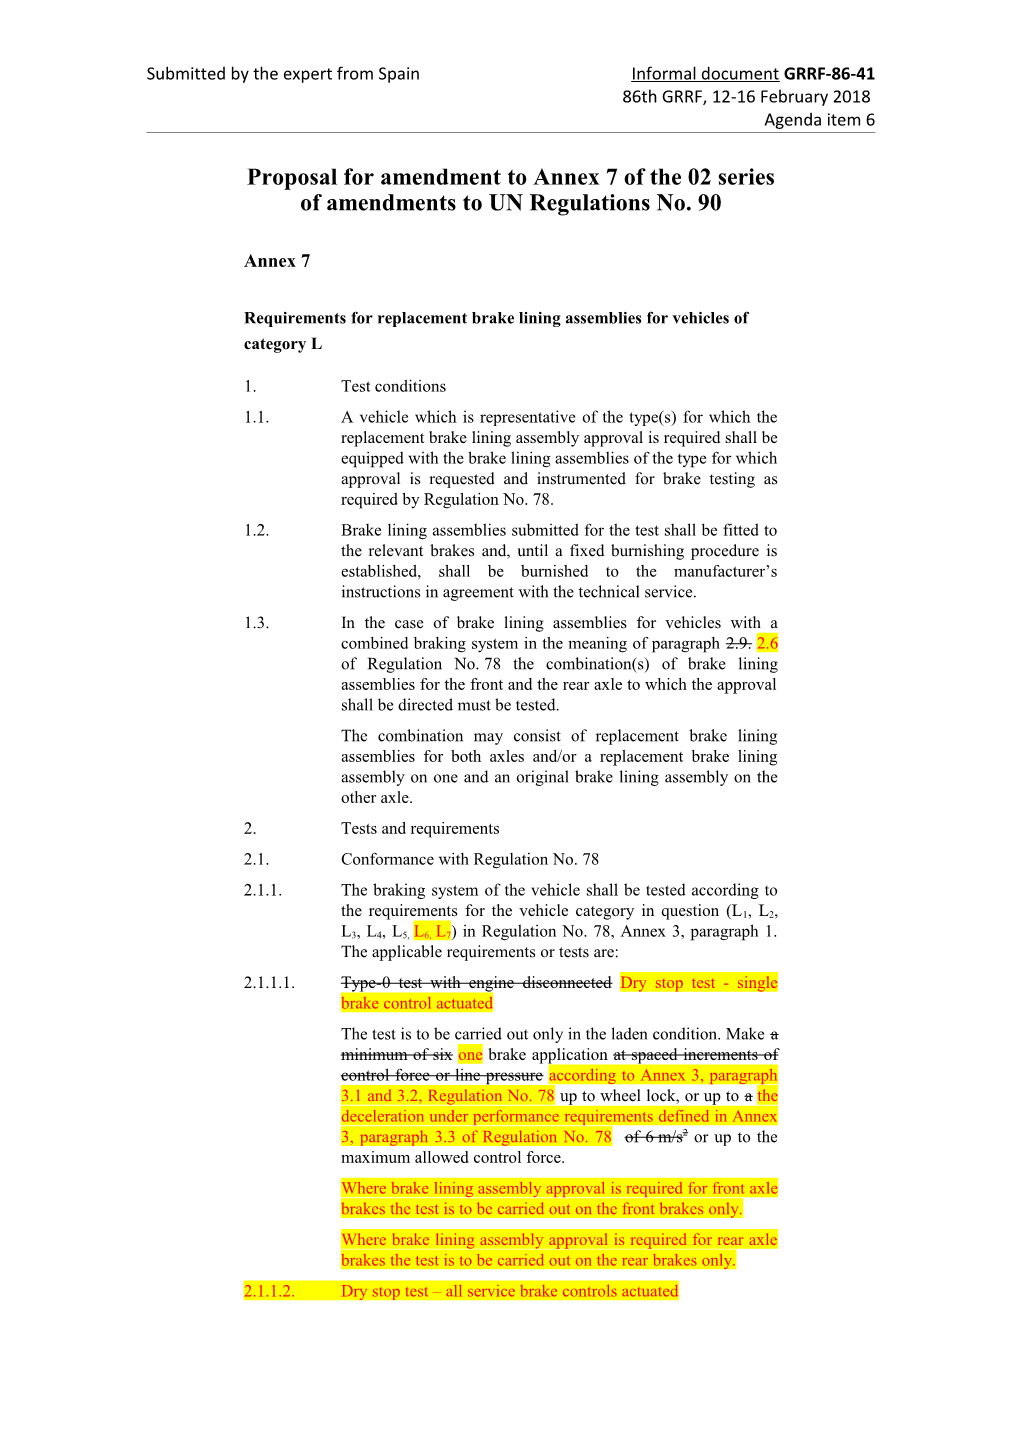 Proposal for Amendment to Annex 7 Ofthe 02 Series of Amendments to UN Regulations No. 90